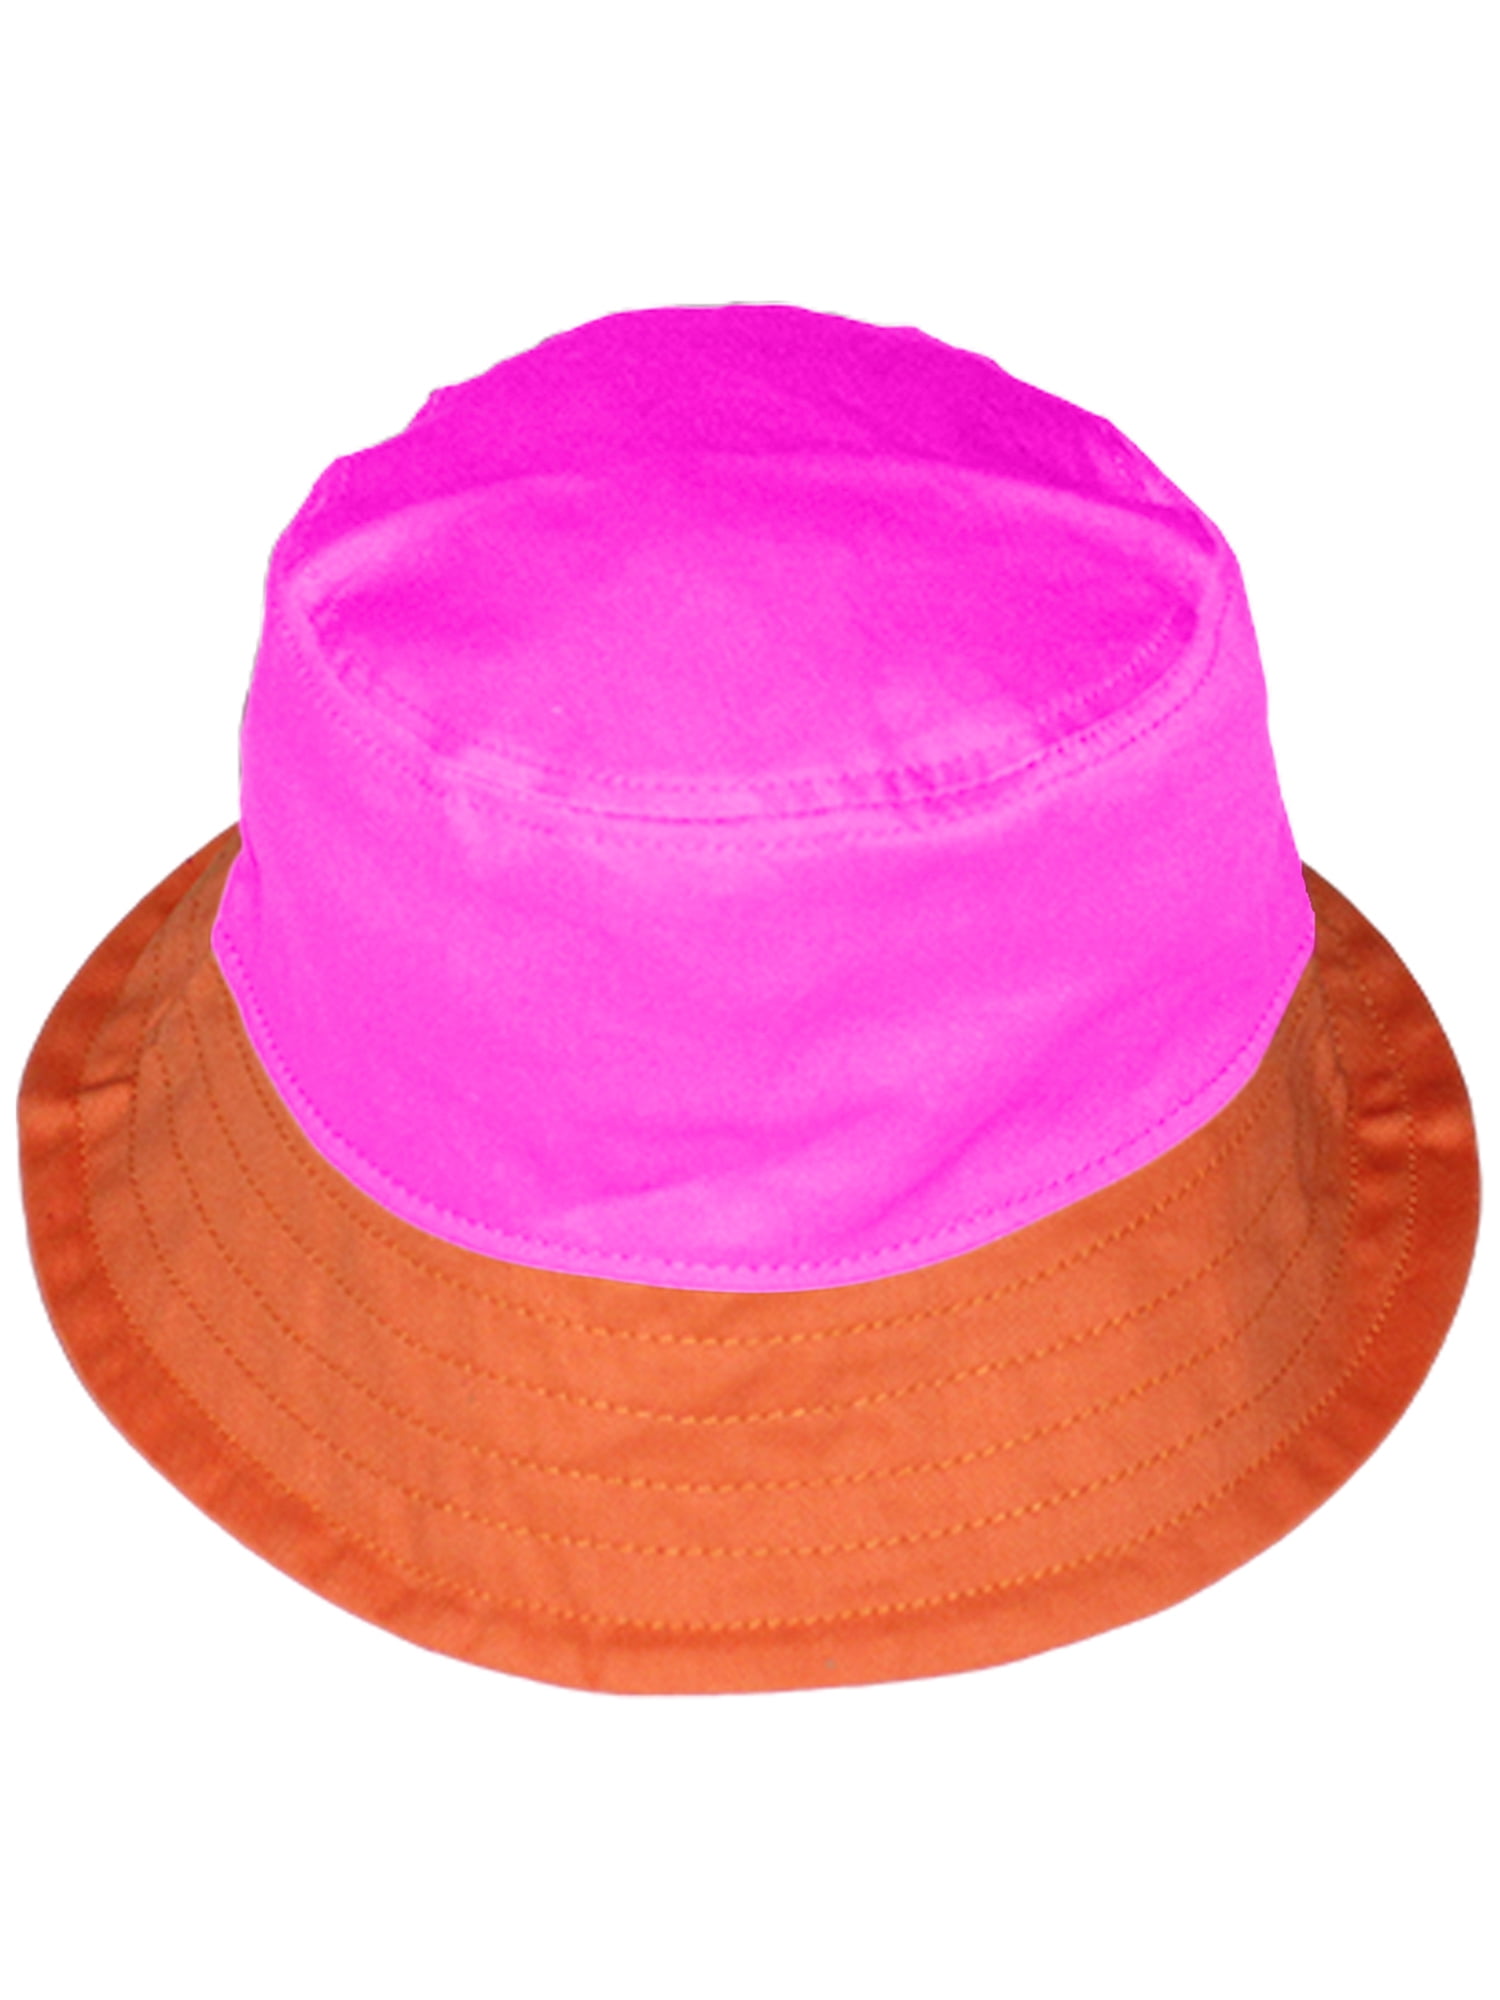 Blue and Orange Bucket hat 100% handmade